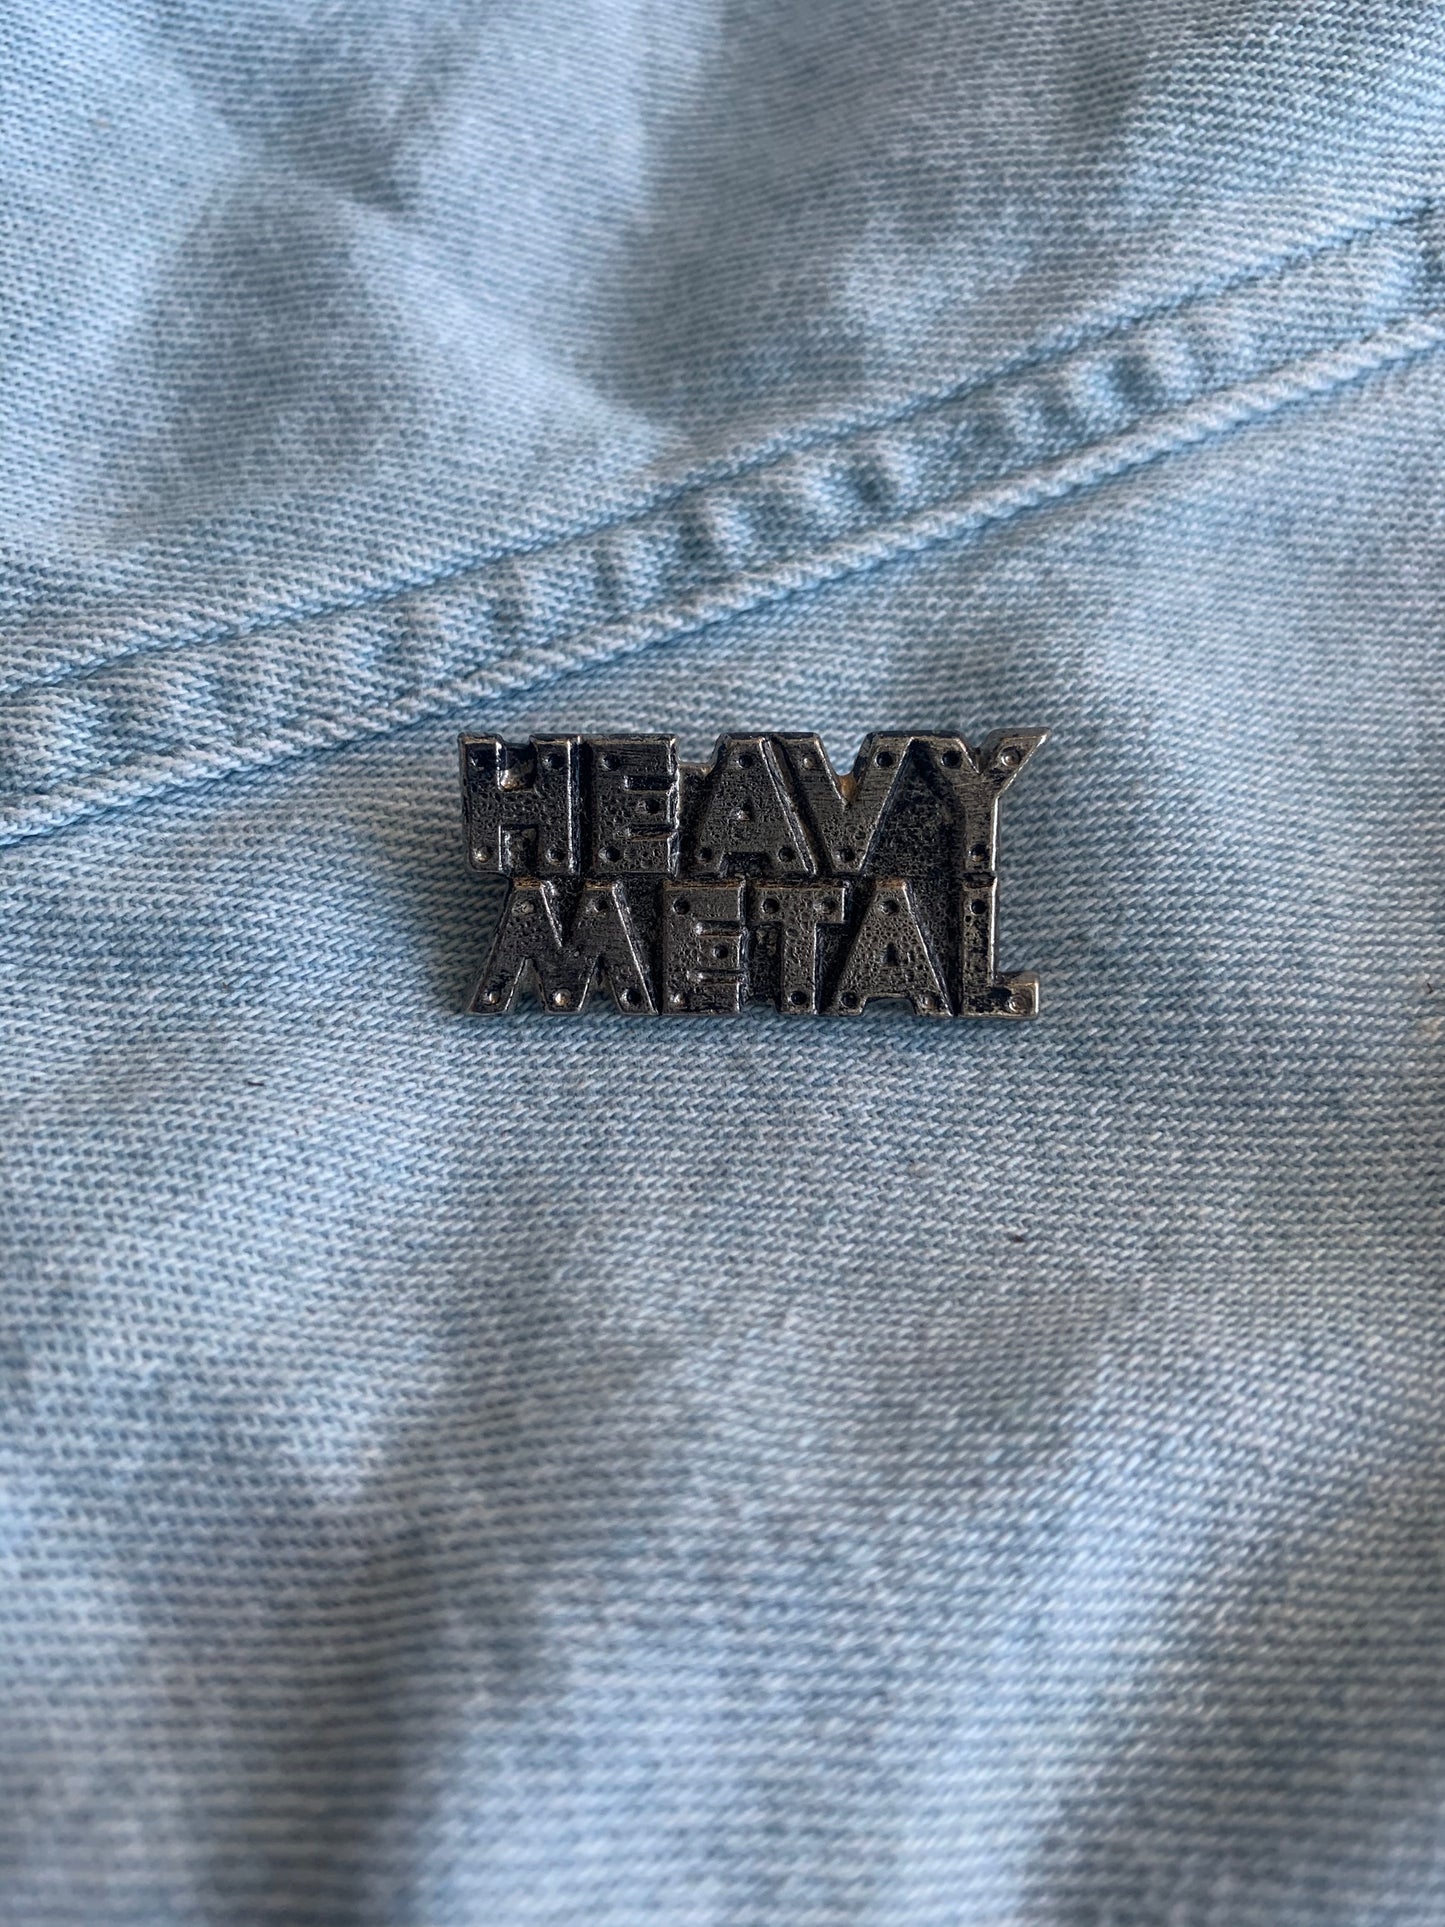 Pin Brooch Heavy Metal